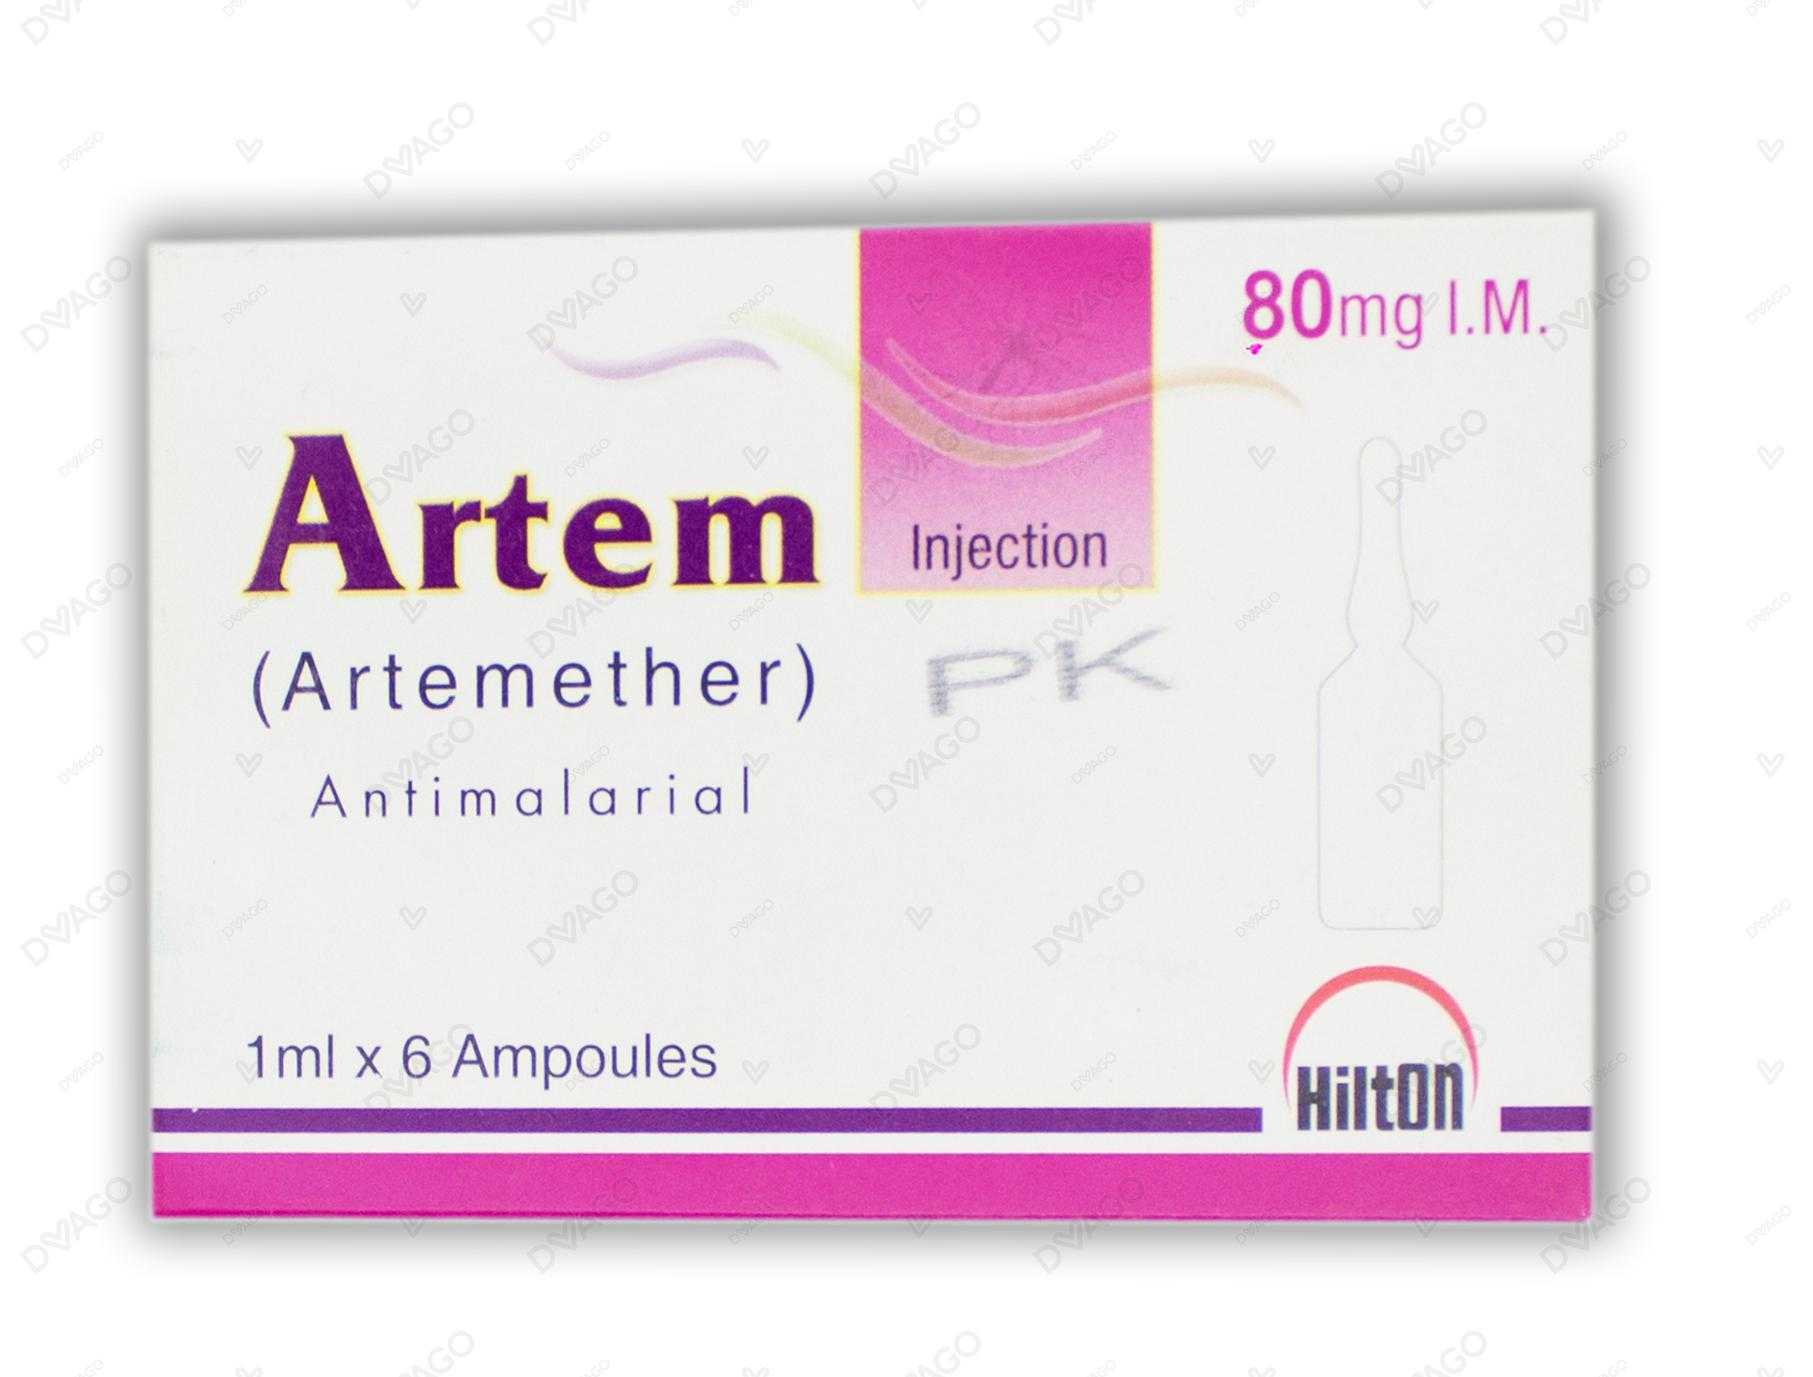 artem injection 80mg